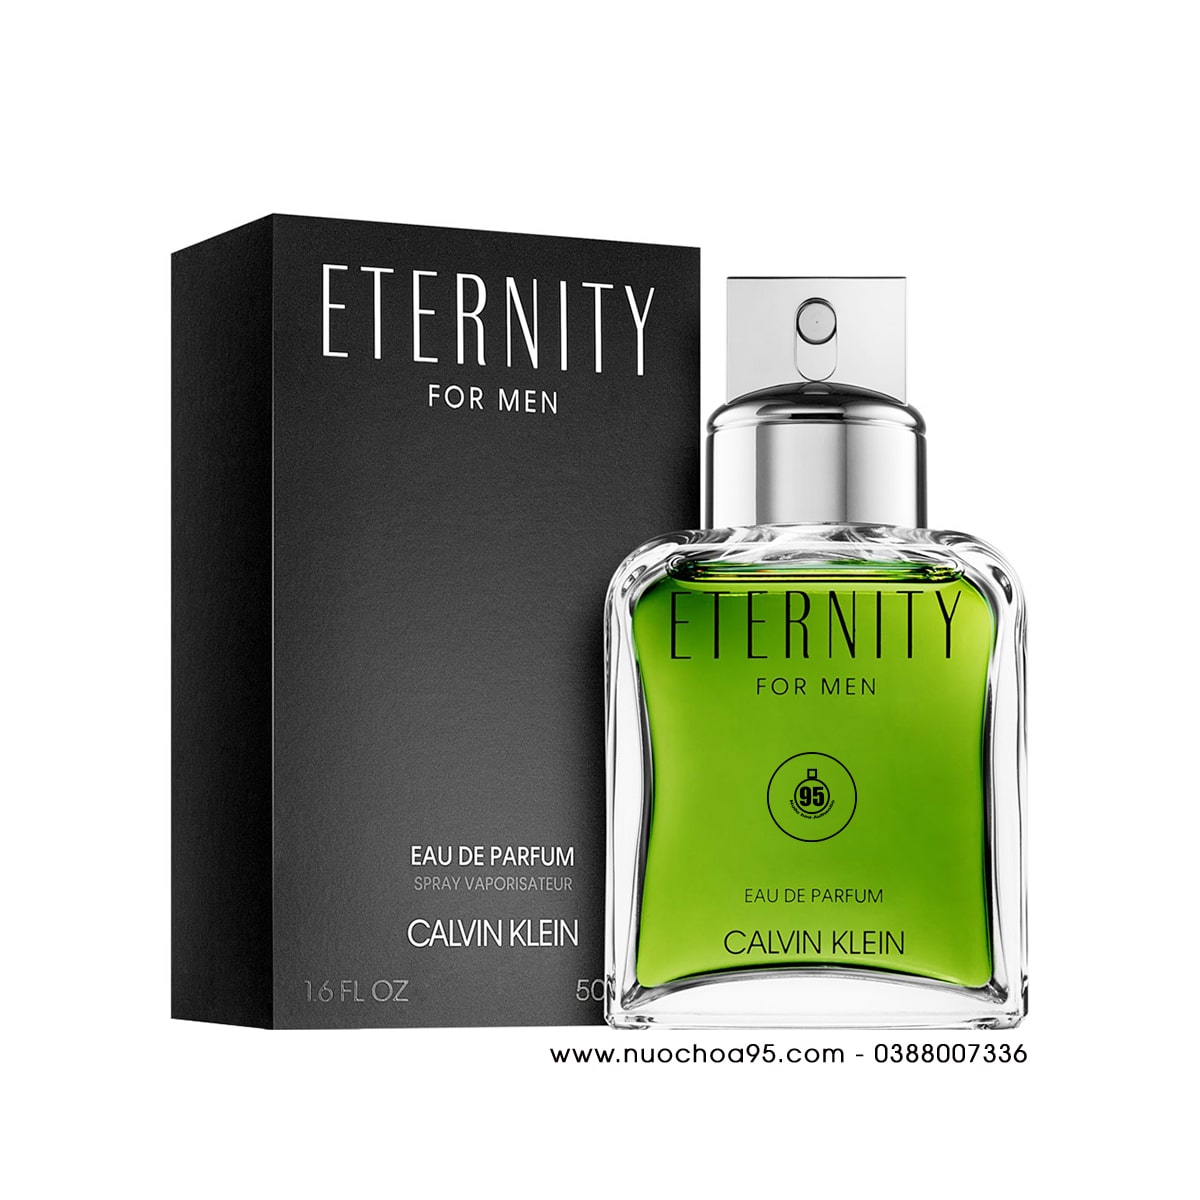 Nước hoa nam CK Eternity For Men EDP của hãng Calvin Klein